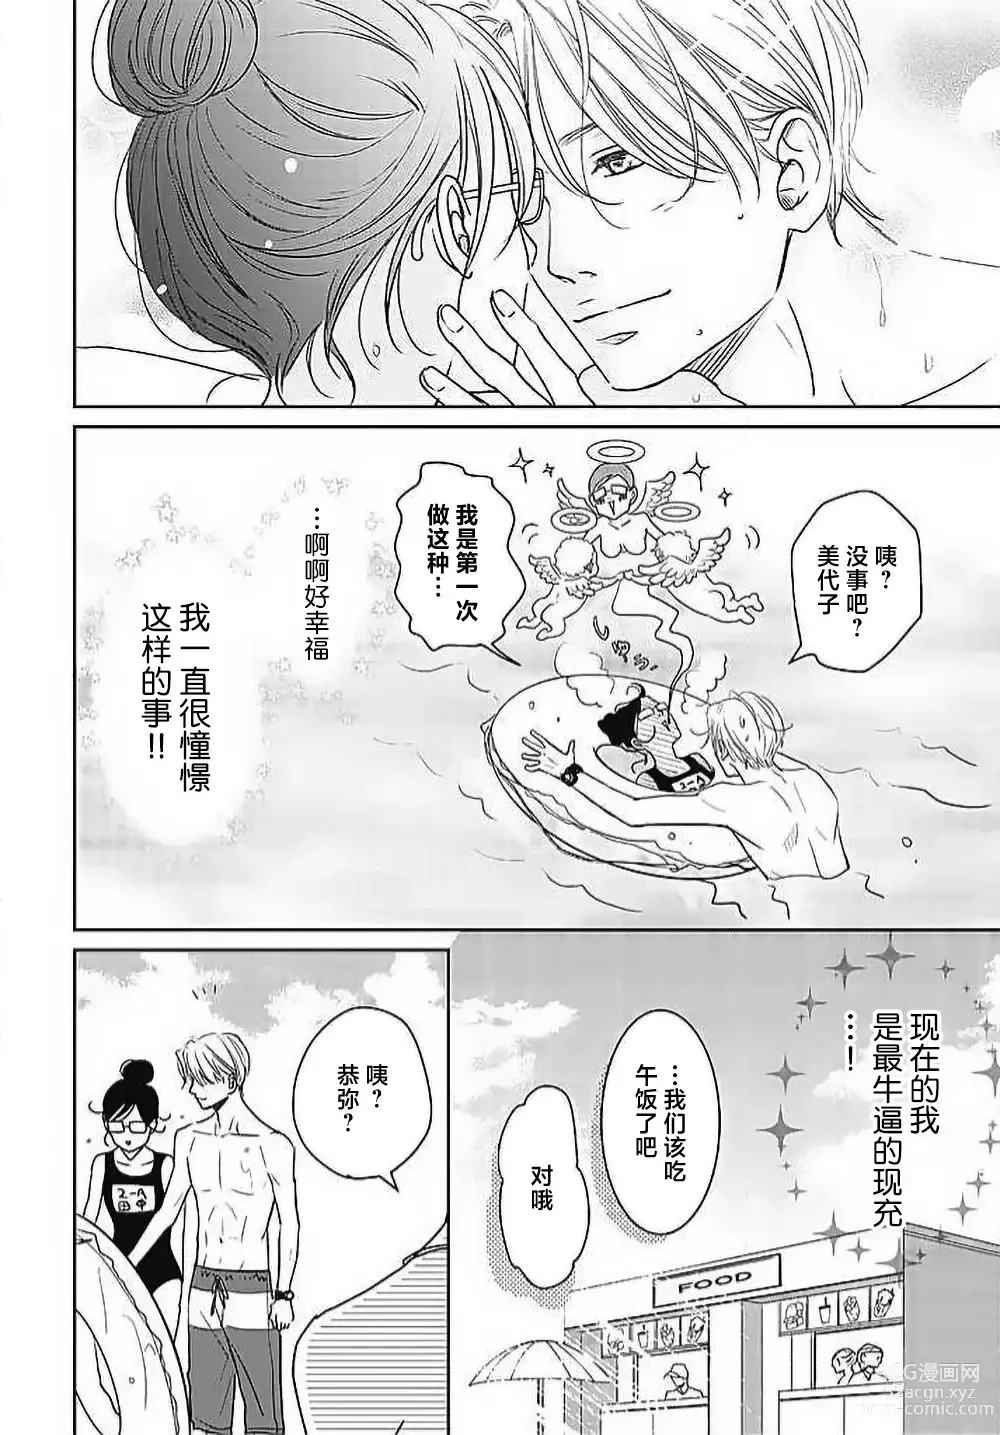 Page 169 of manga 今夜、于保健室甜蜜融化 1-5